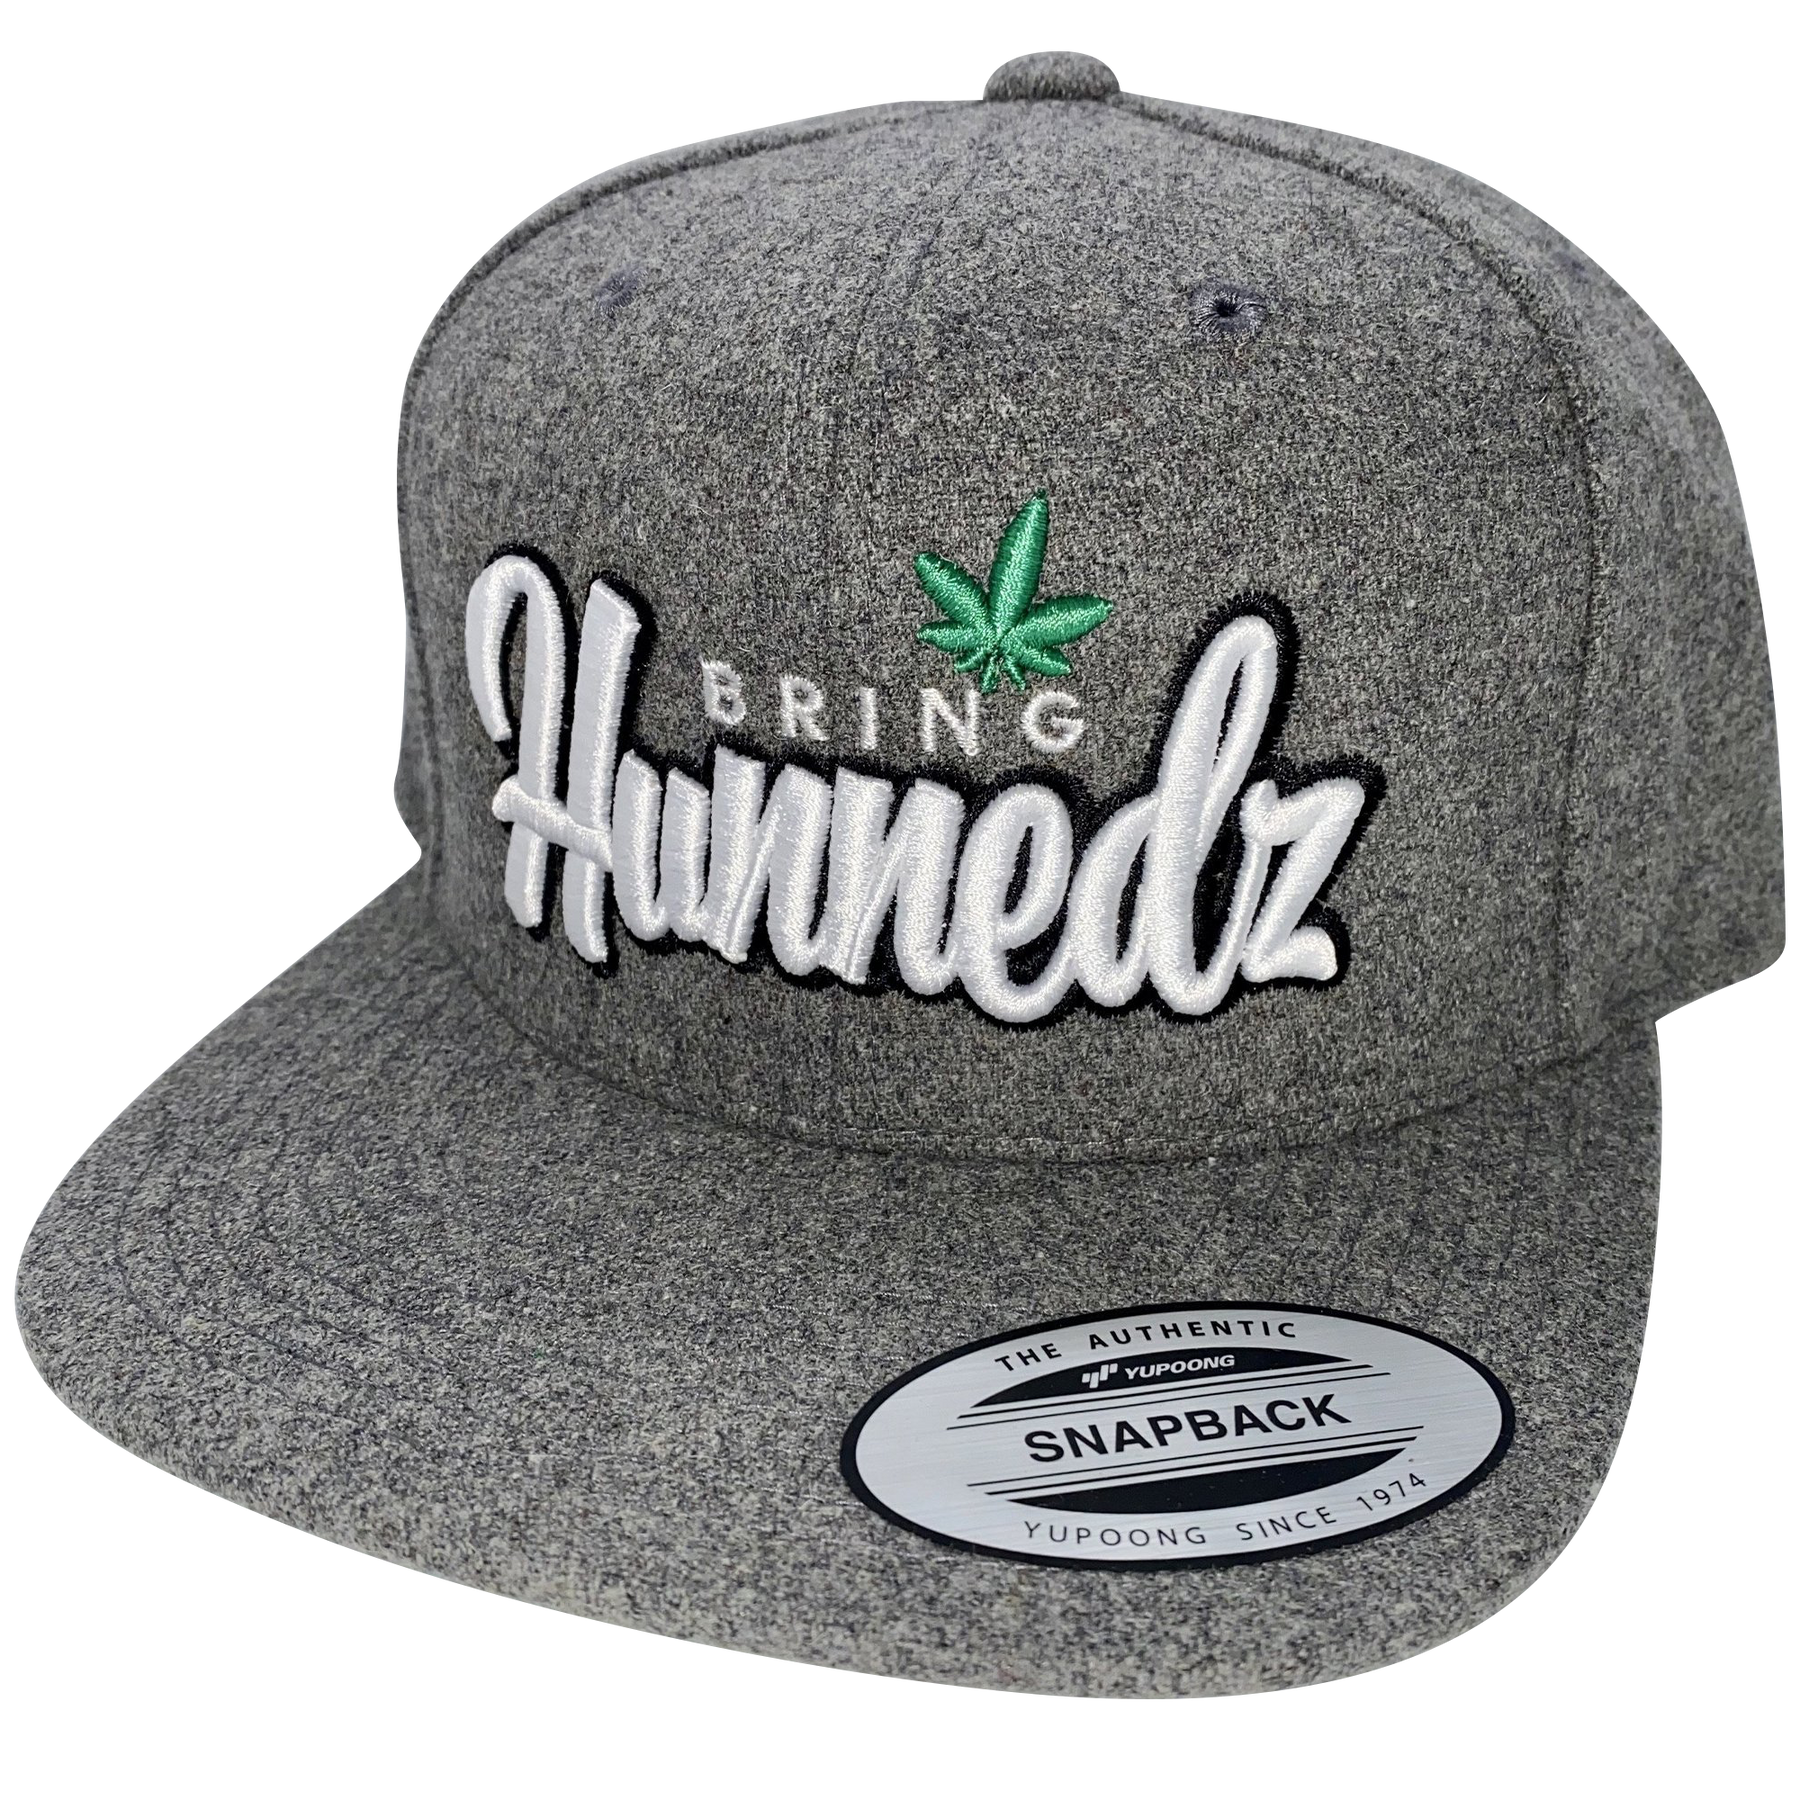 Bring Hunnedz Hat